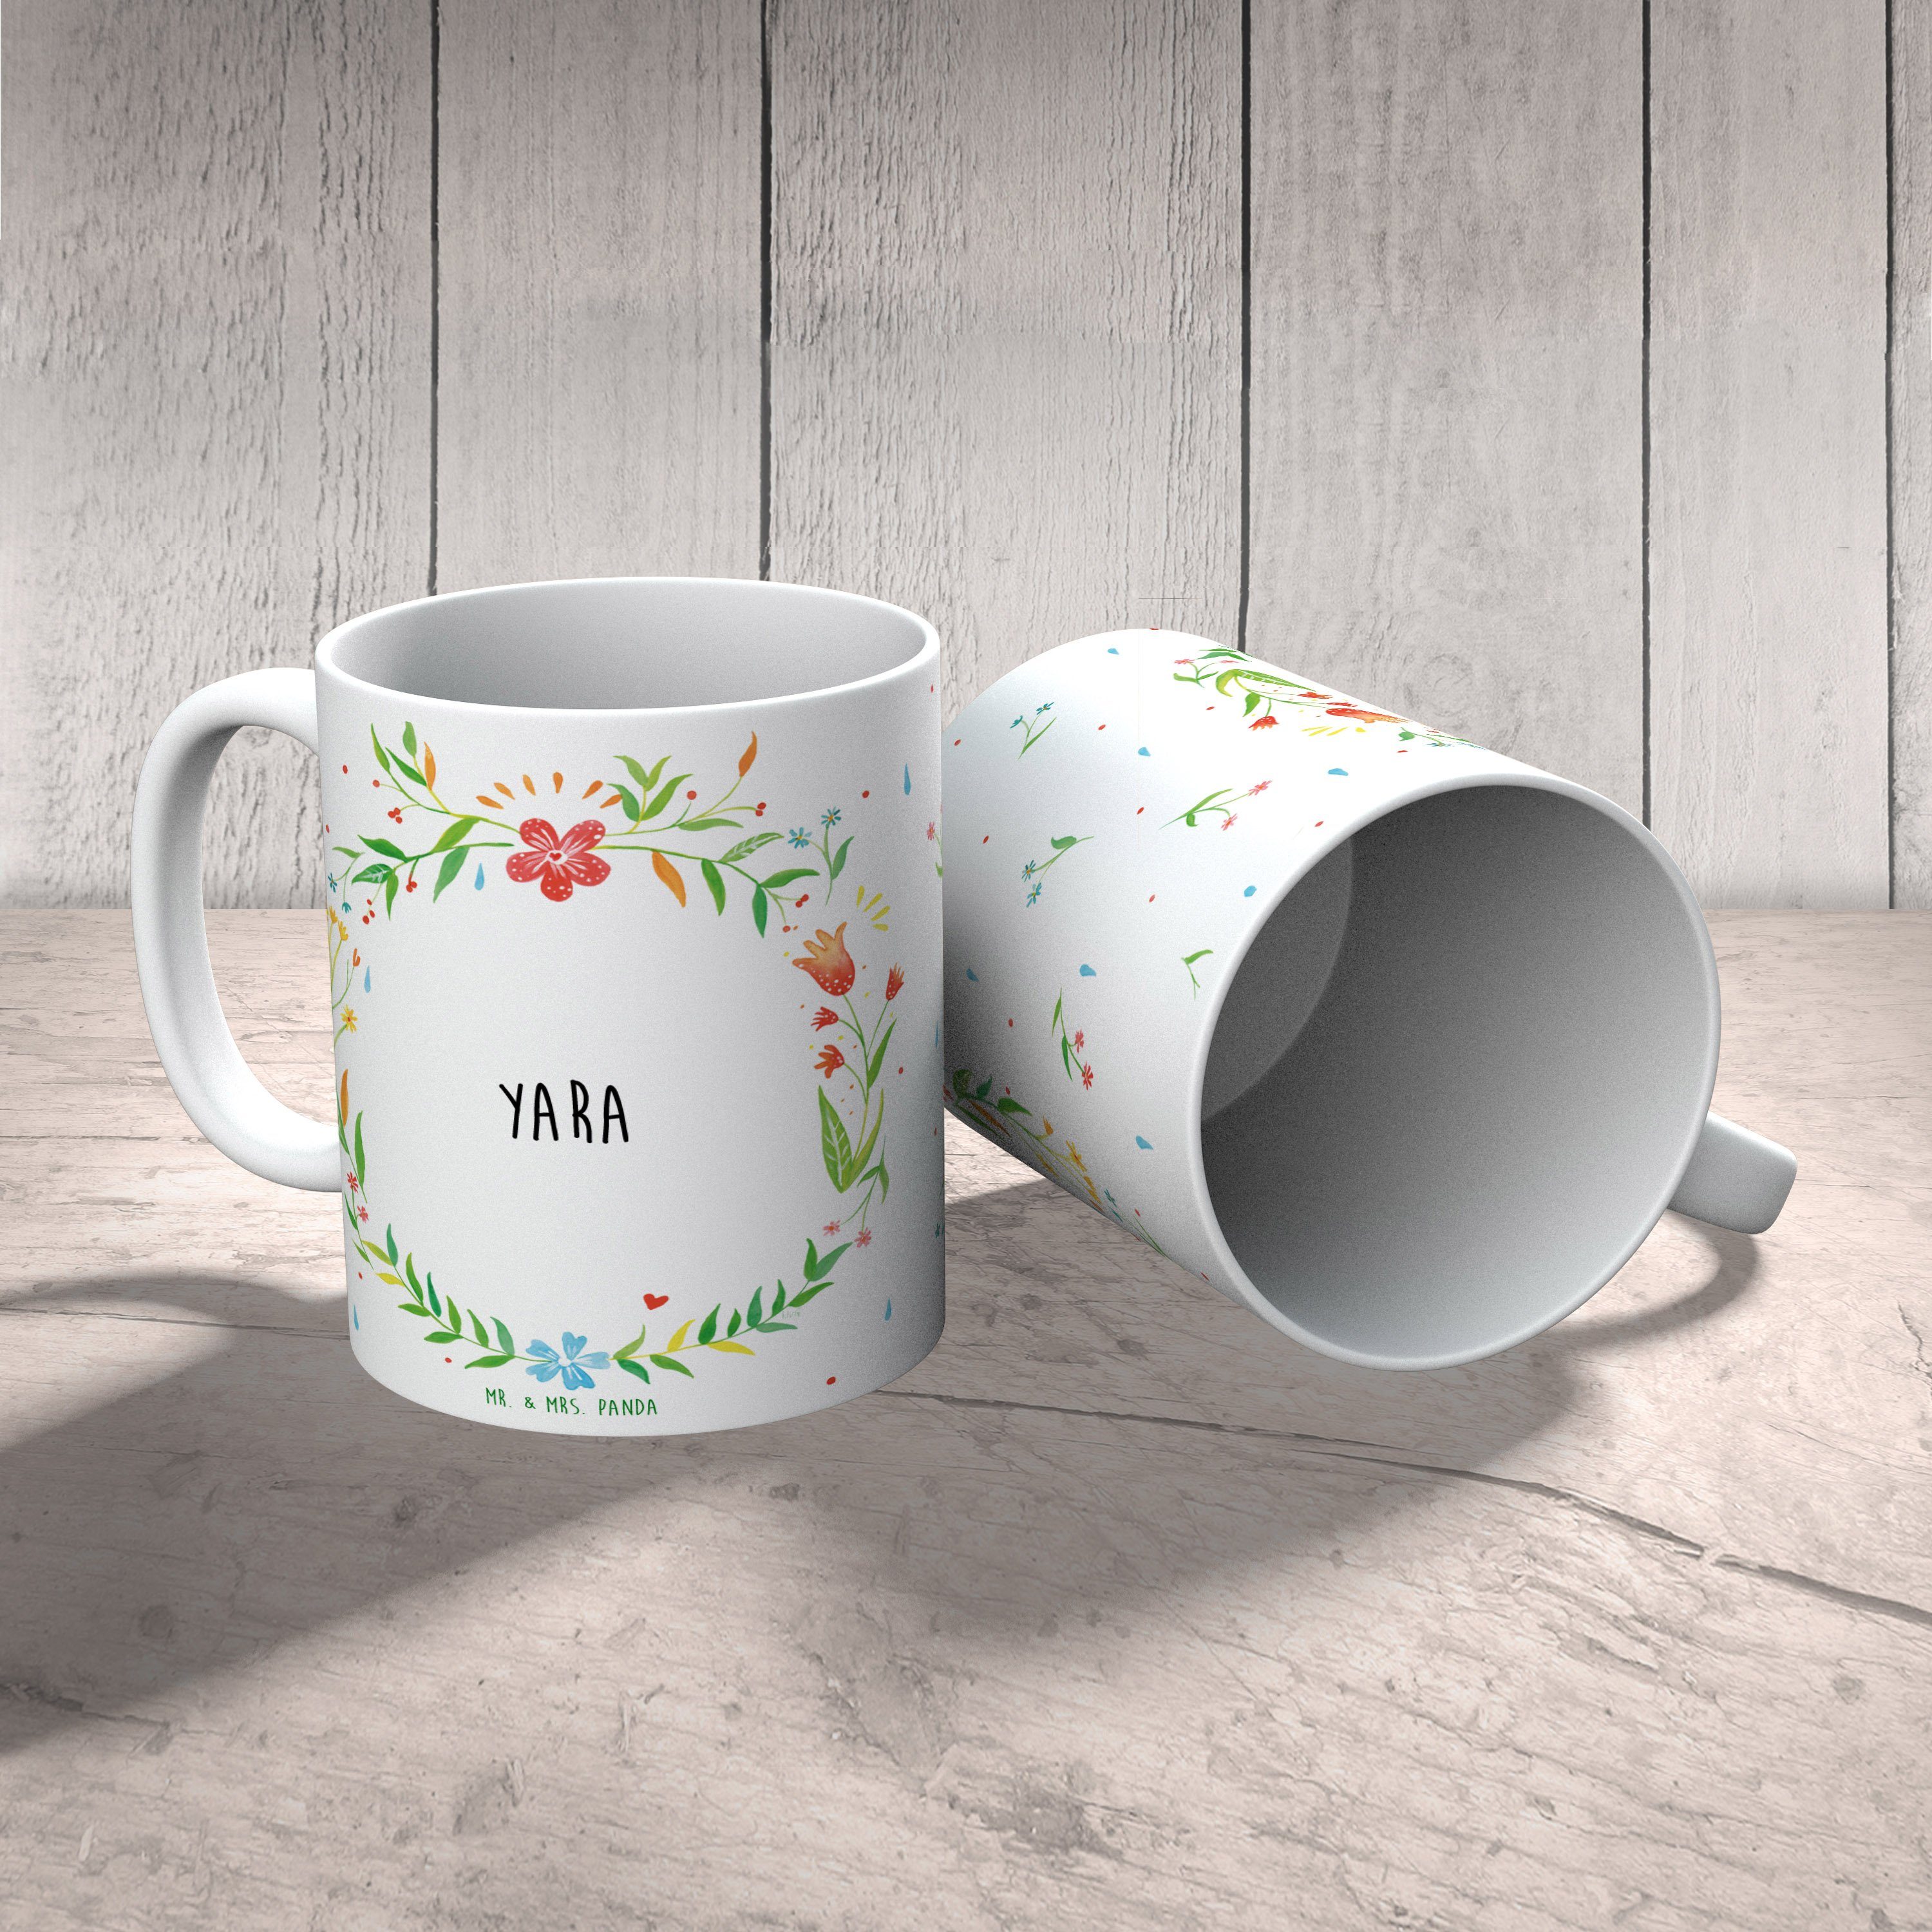 - Tasse, Tasse Porzellantasse, Geschenk, Tasse Geschenk & Panda Kaffee, Yara Mrs. Motive, Mr. Keramik